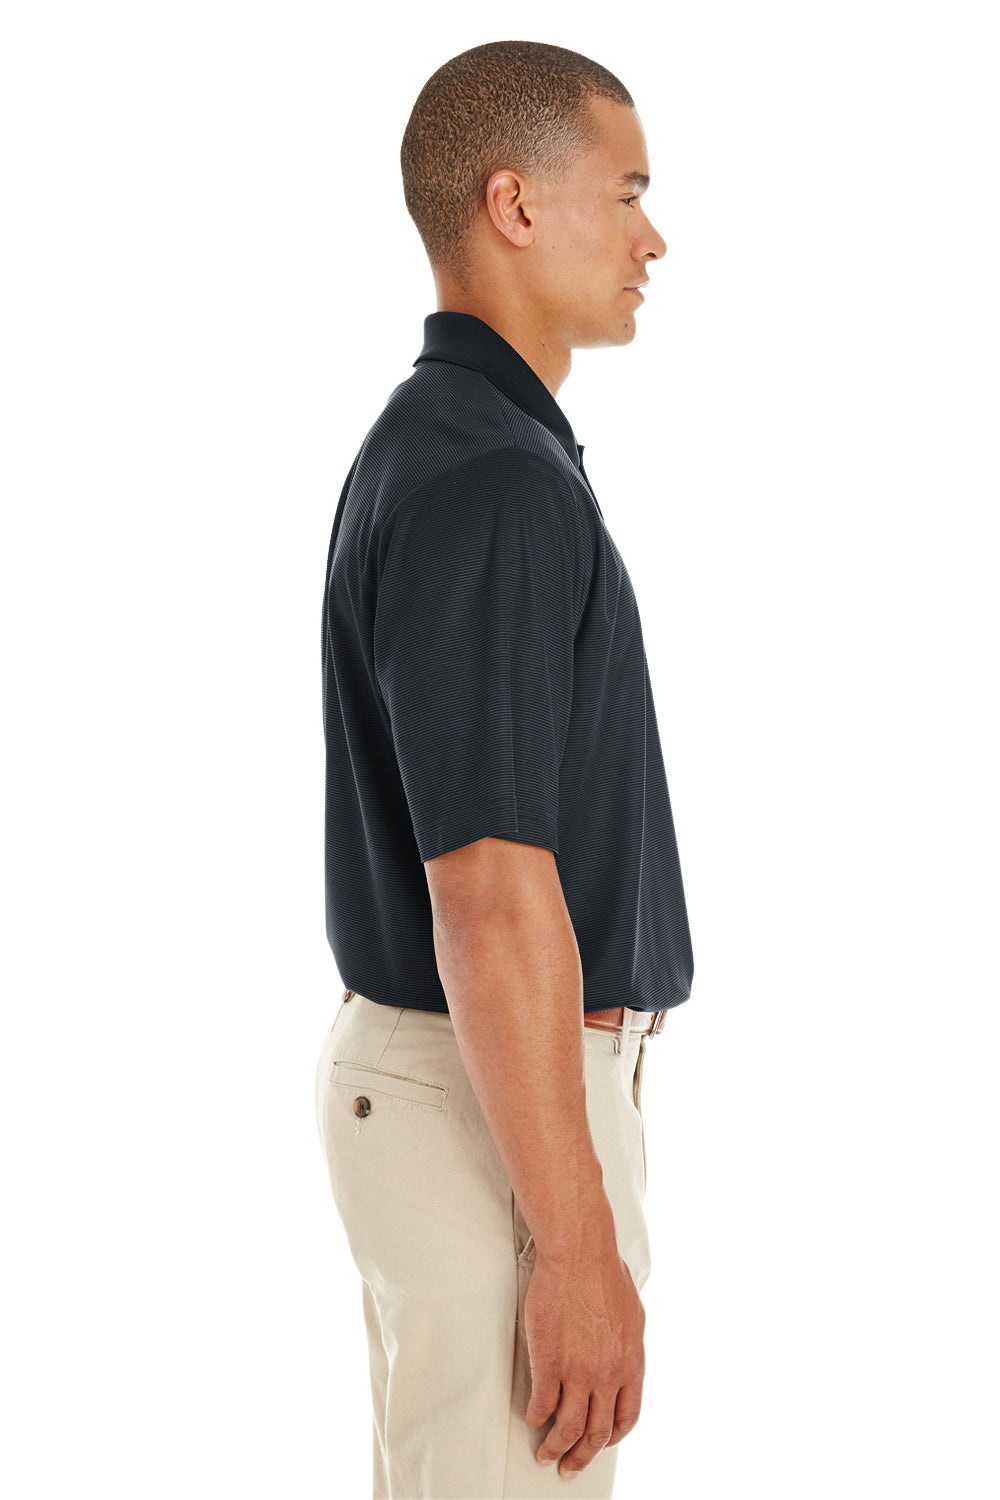 Core 365 CE102 Mens Express Performance Moisture Wicking Short Sleeve Polo Shirt Black Side